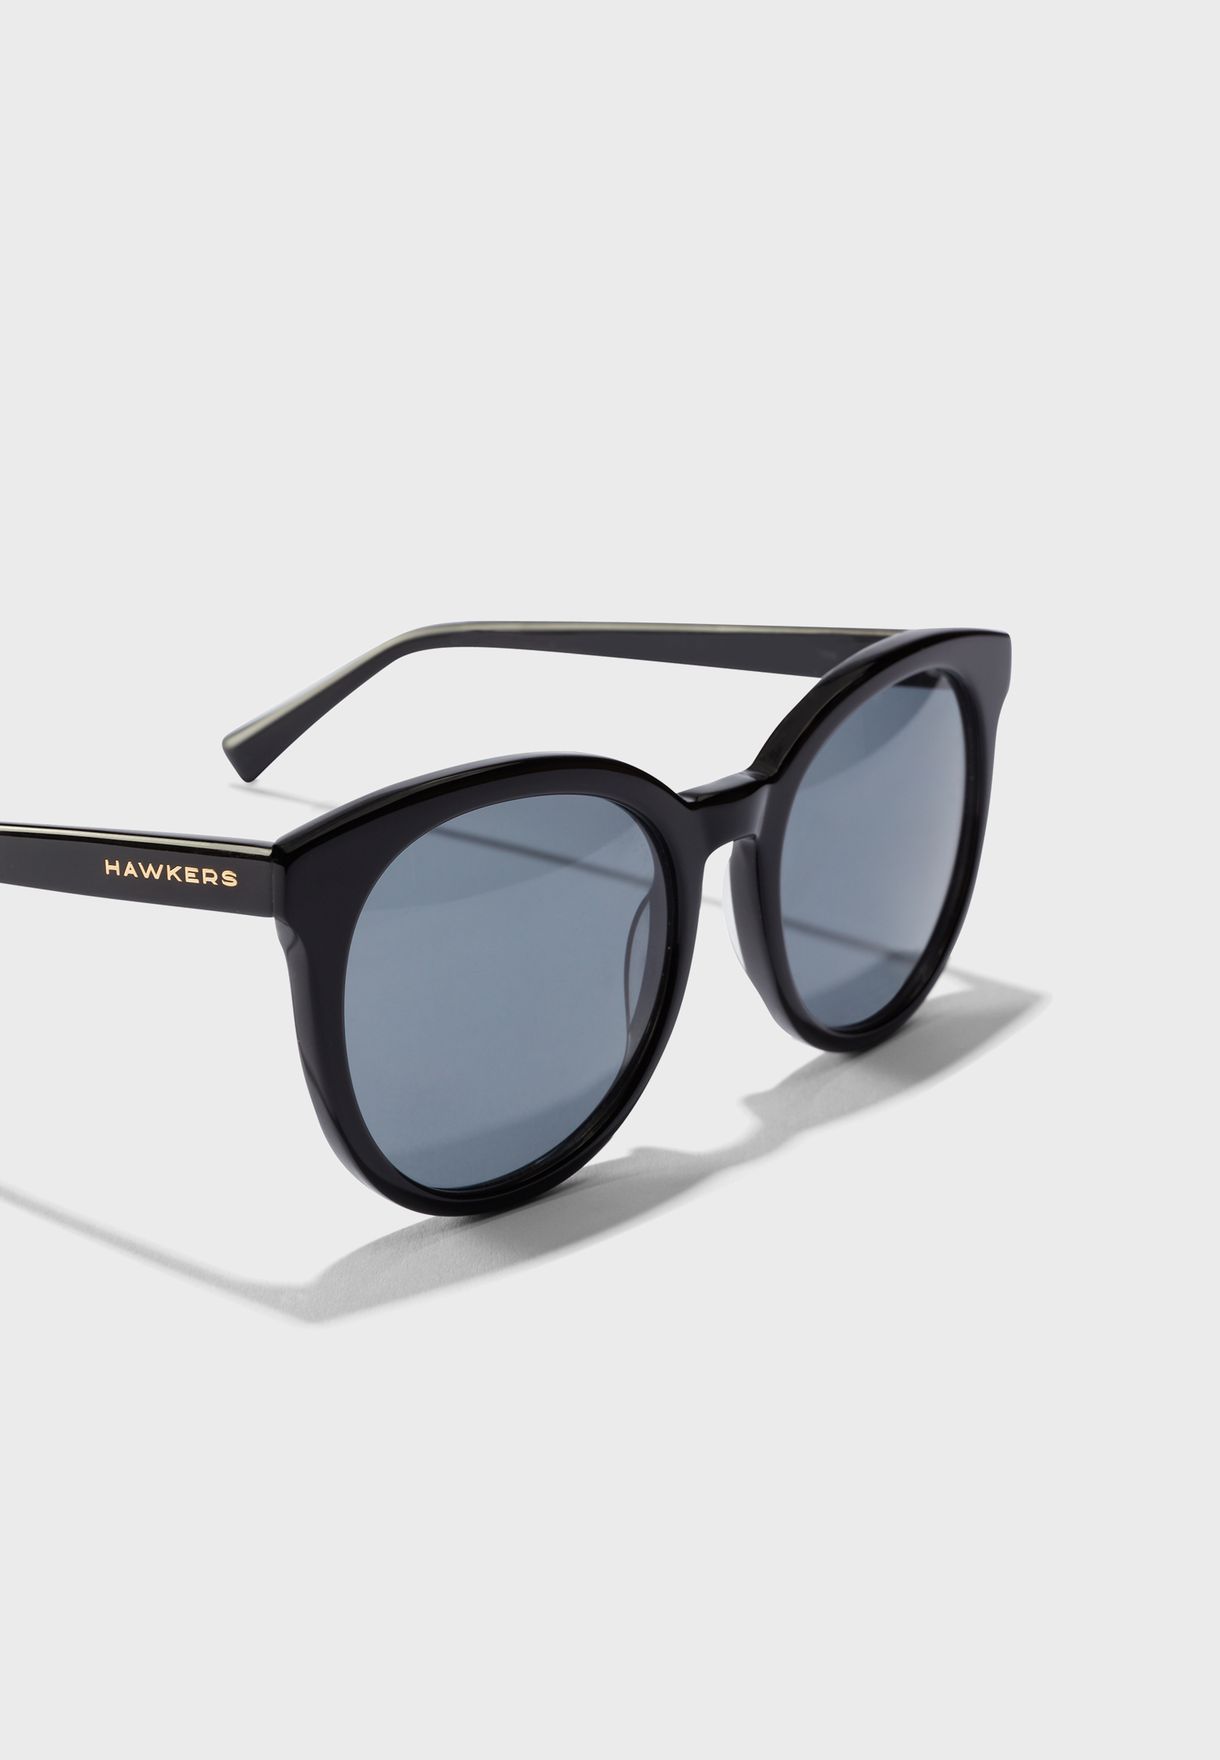 Resort Wayferer Sunglasses